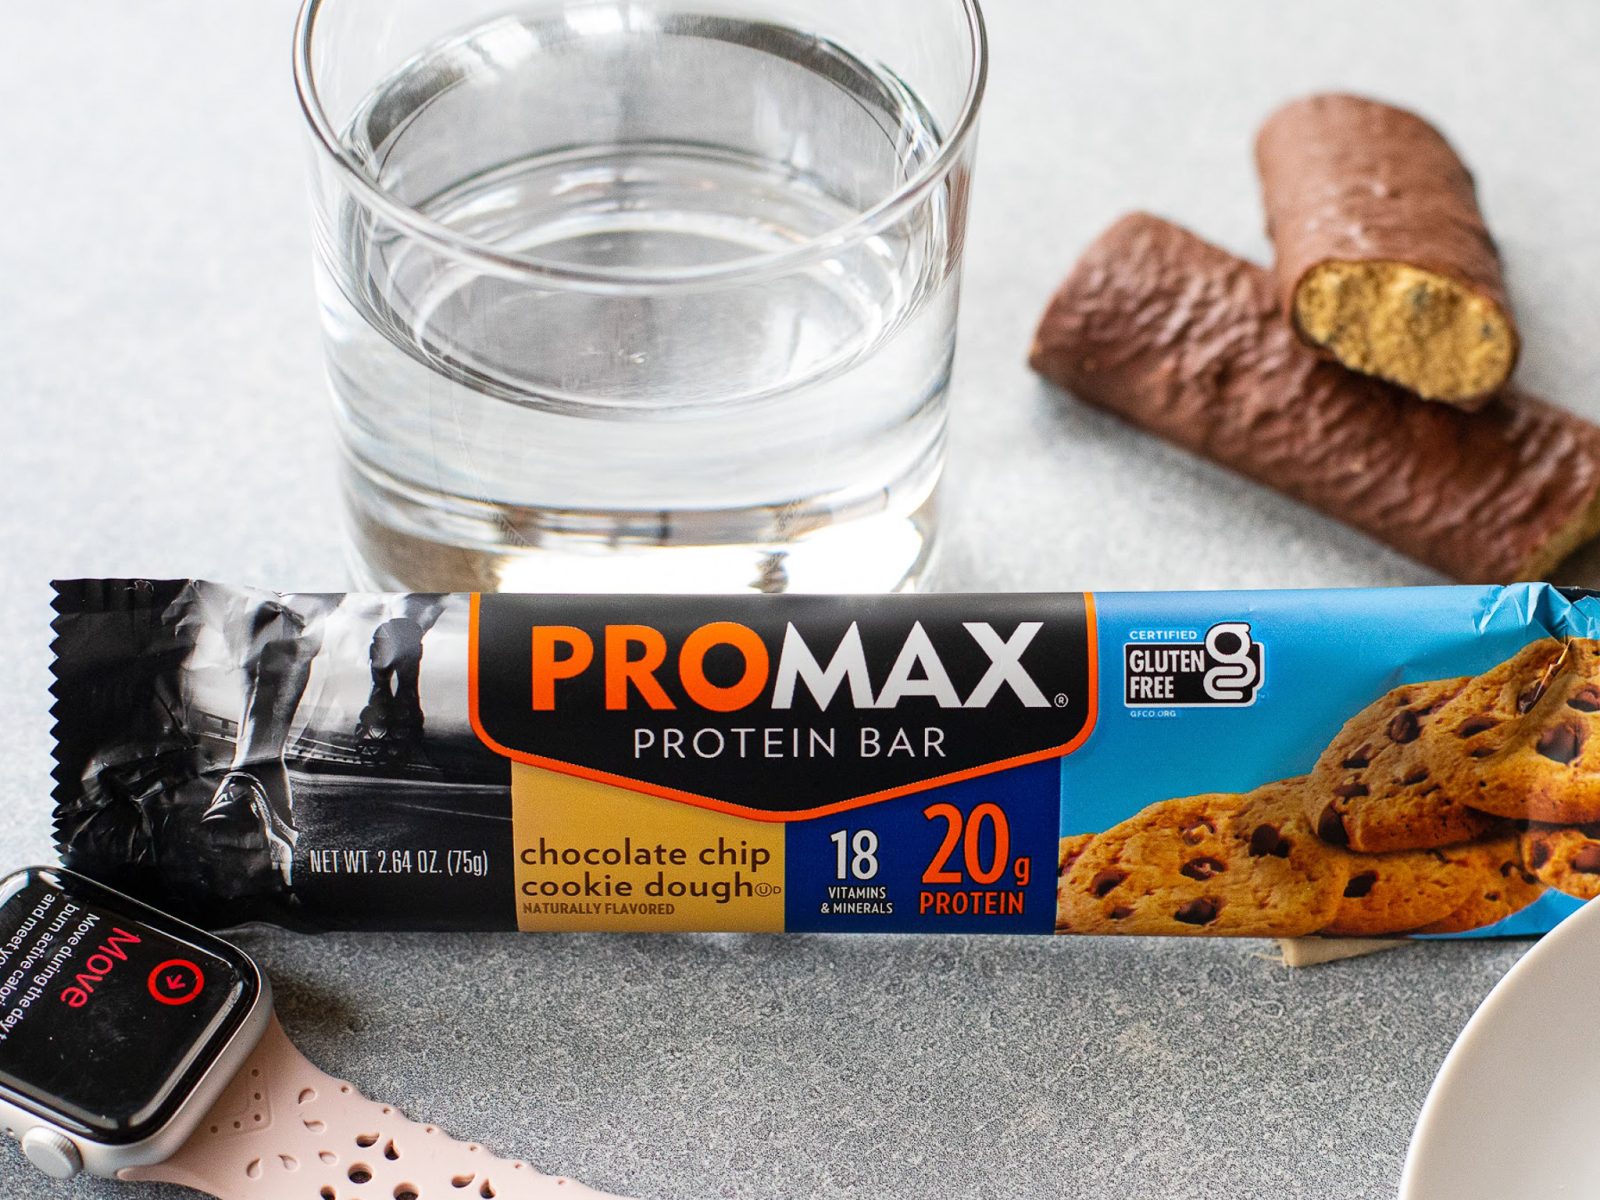 Get Promax Protein Bars For Just 49¢ Per Bar At Kroger (Regular Price $1.25)